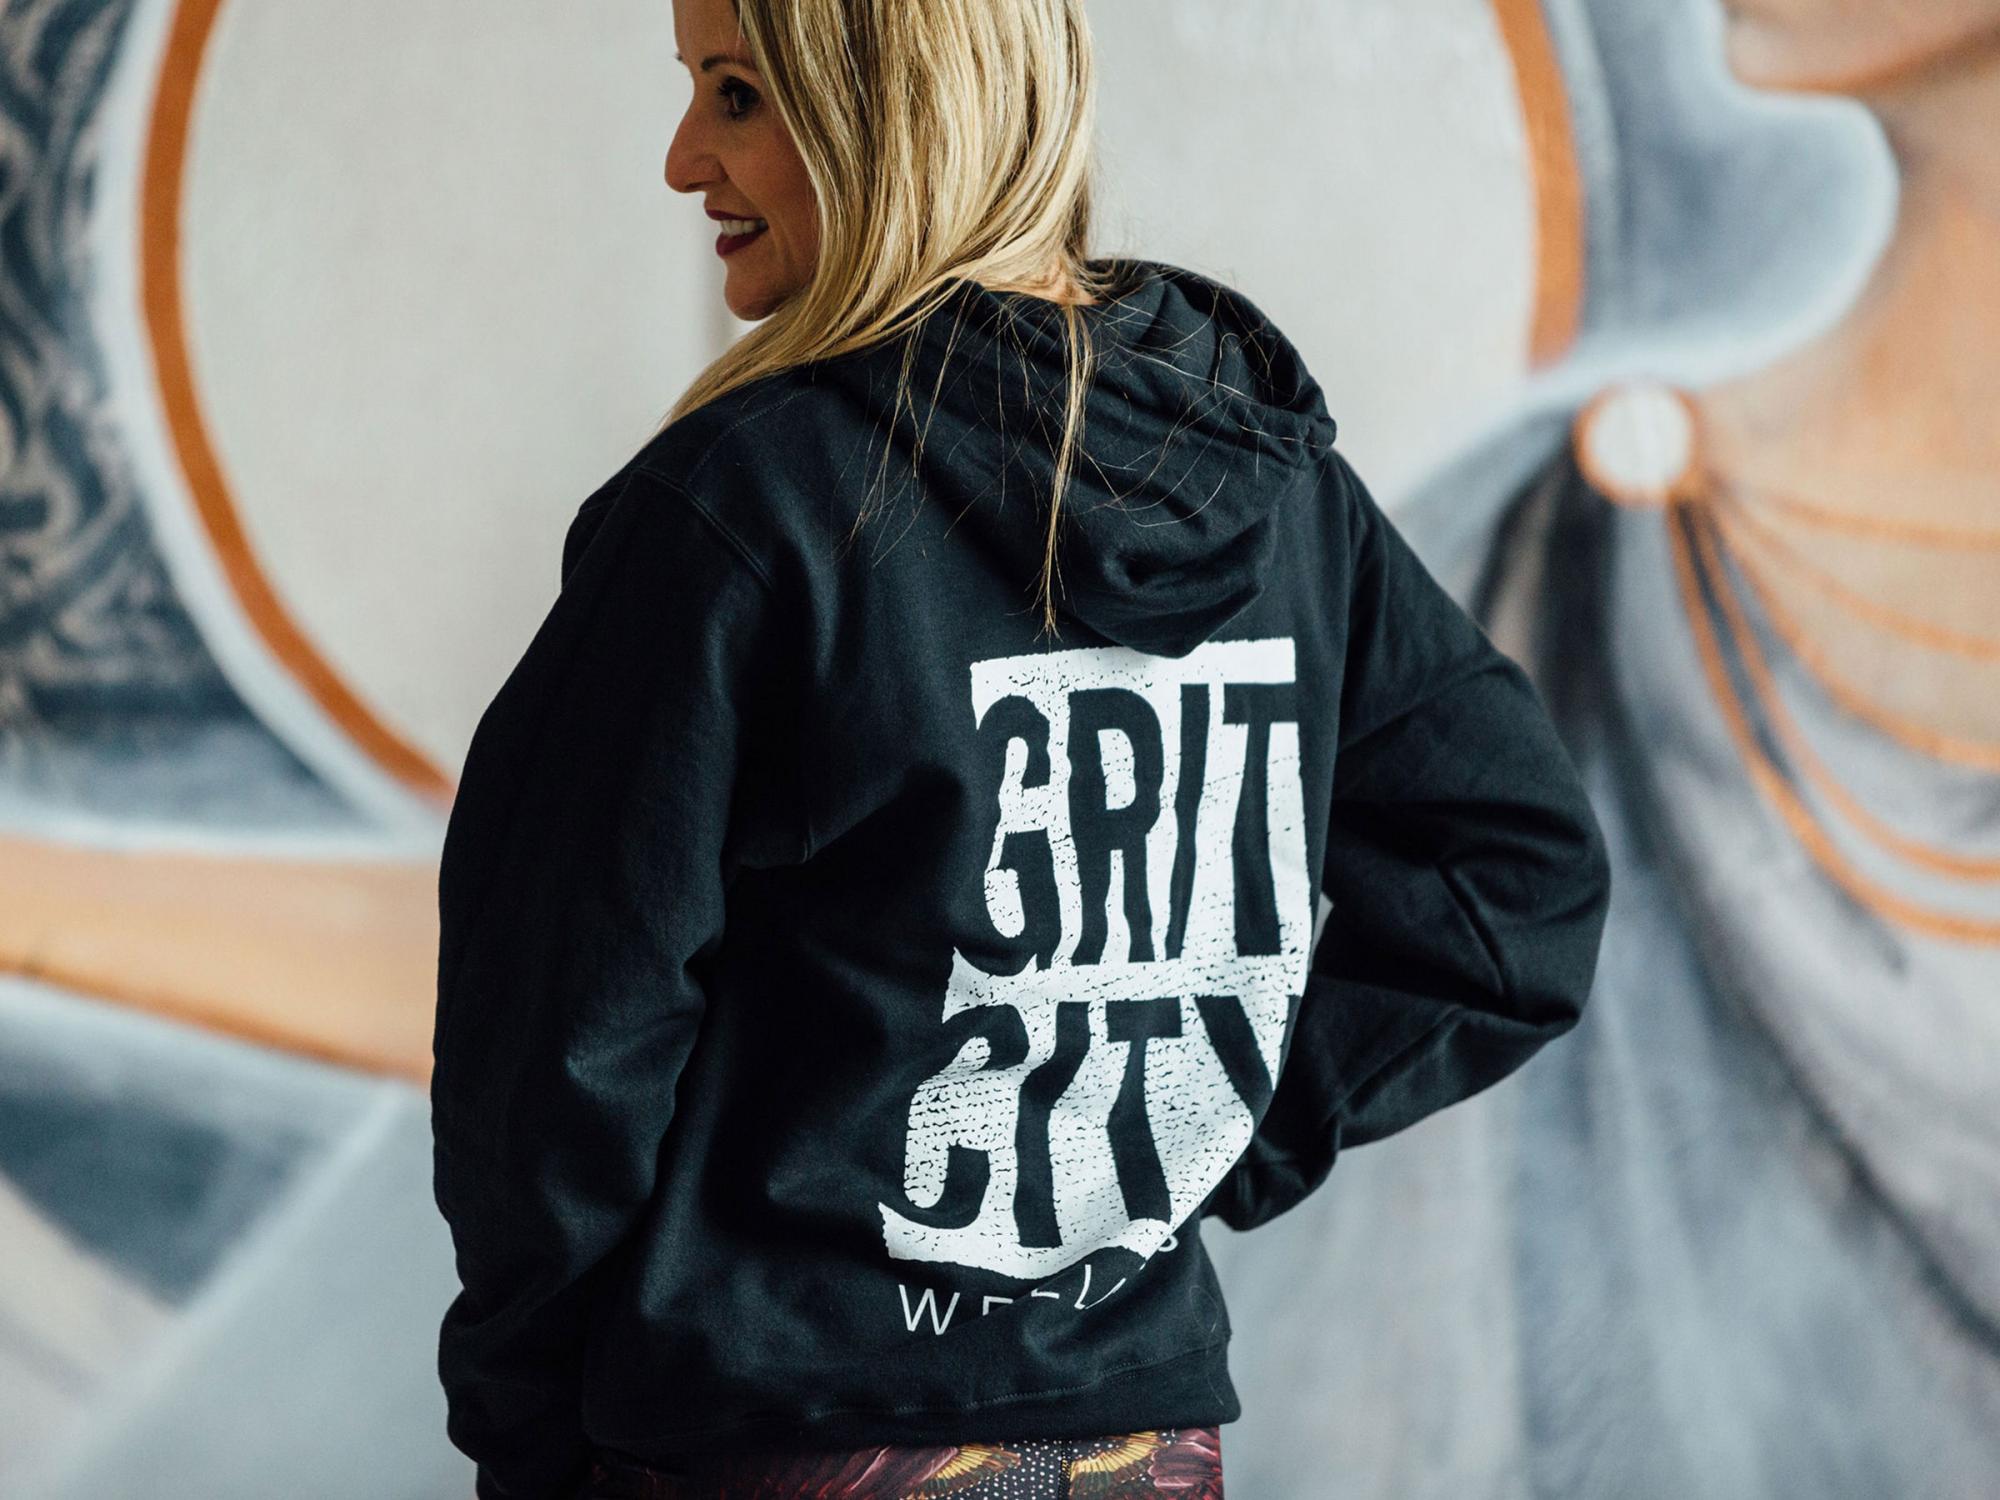 Woman wearing a Grit City Wellness hoodie